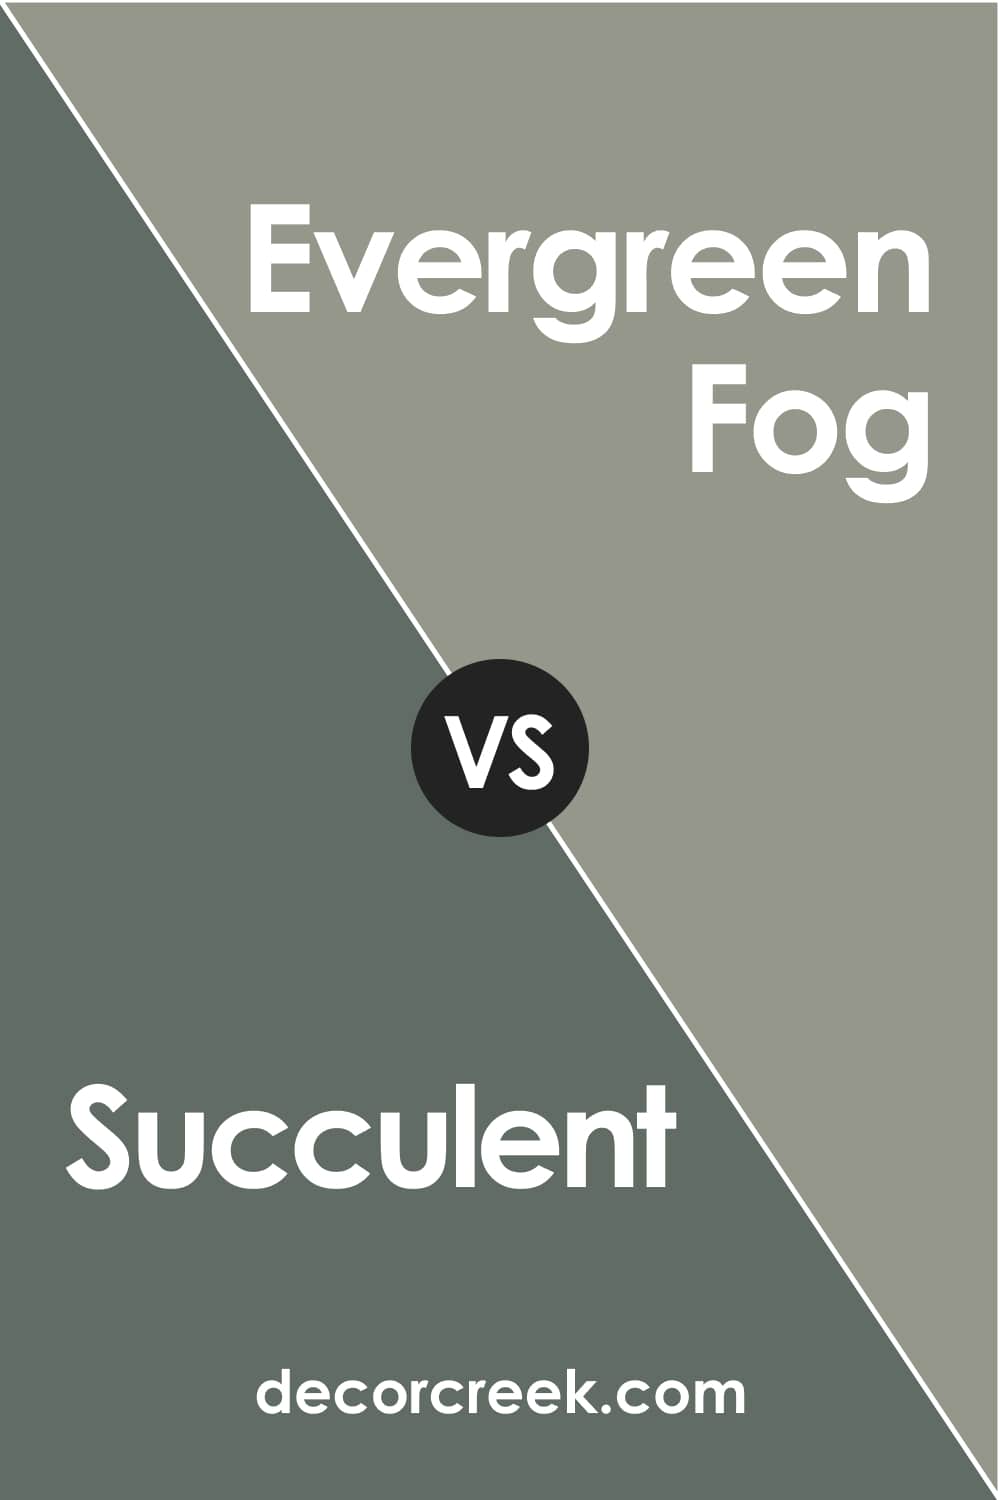 Succulent vs Evergreen Fog